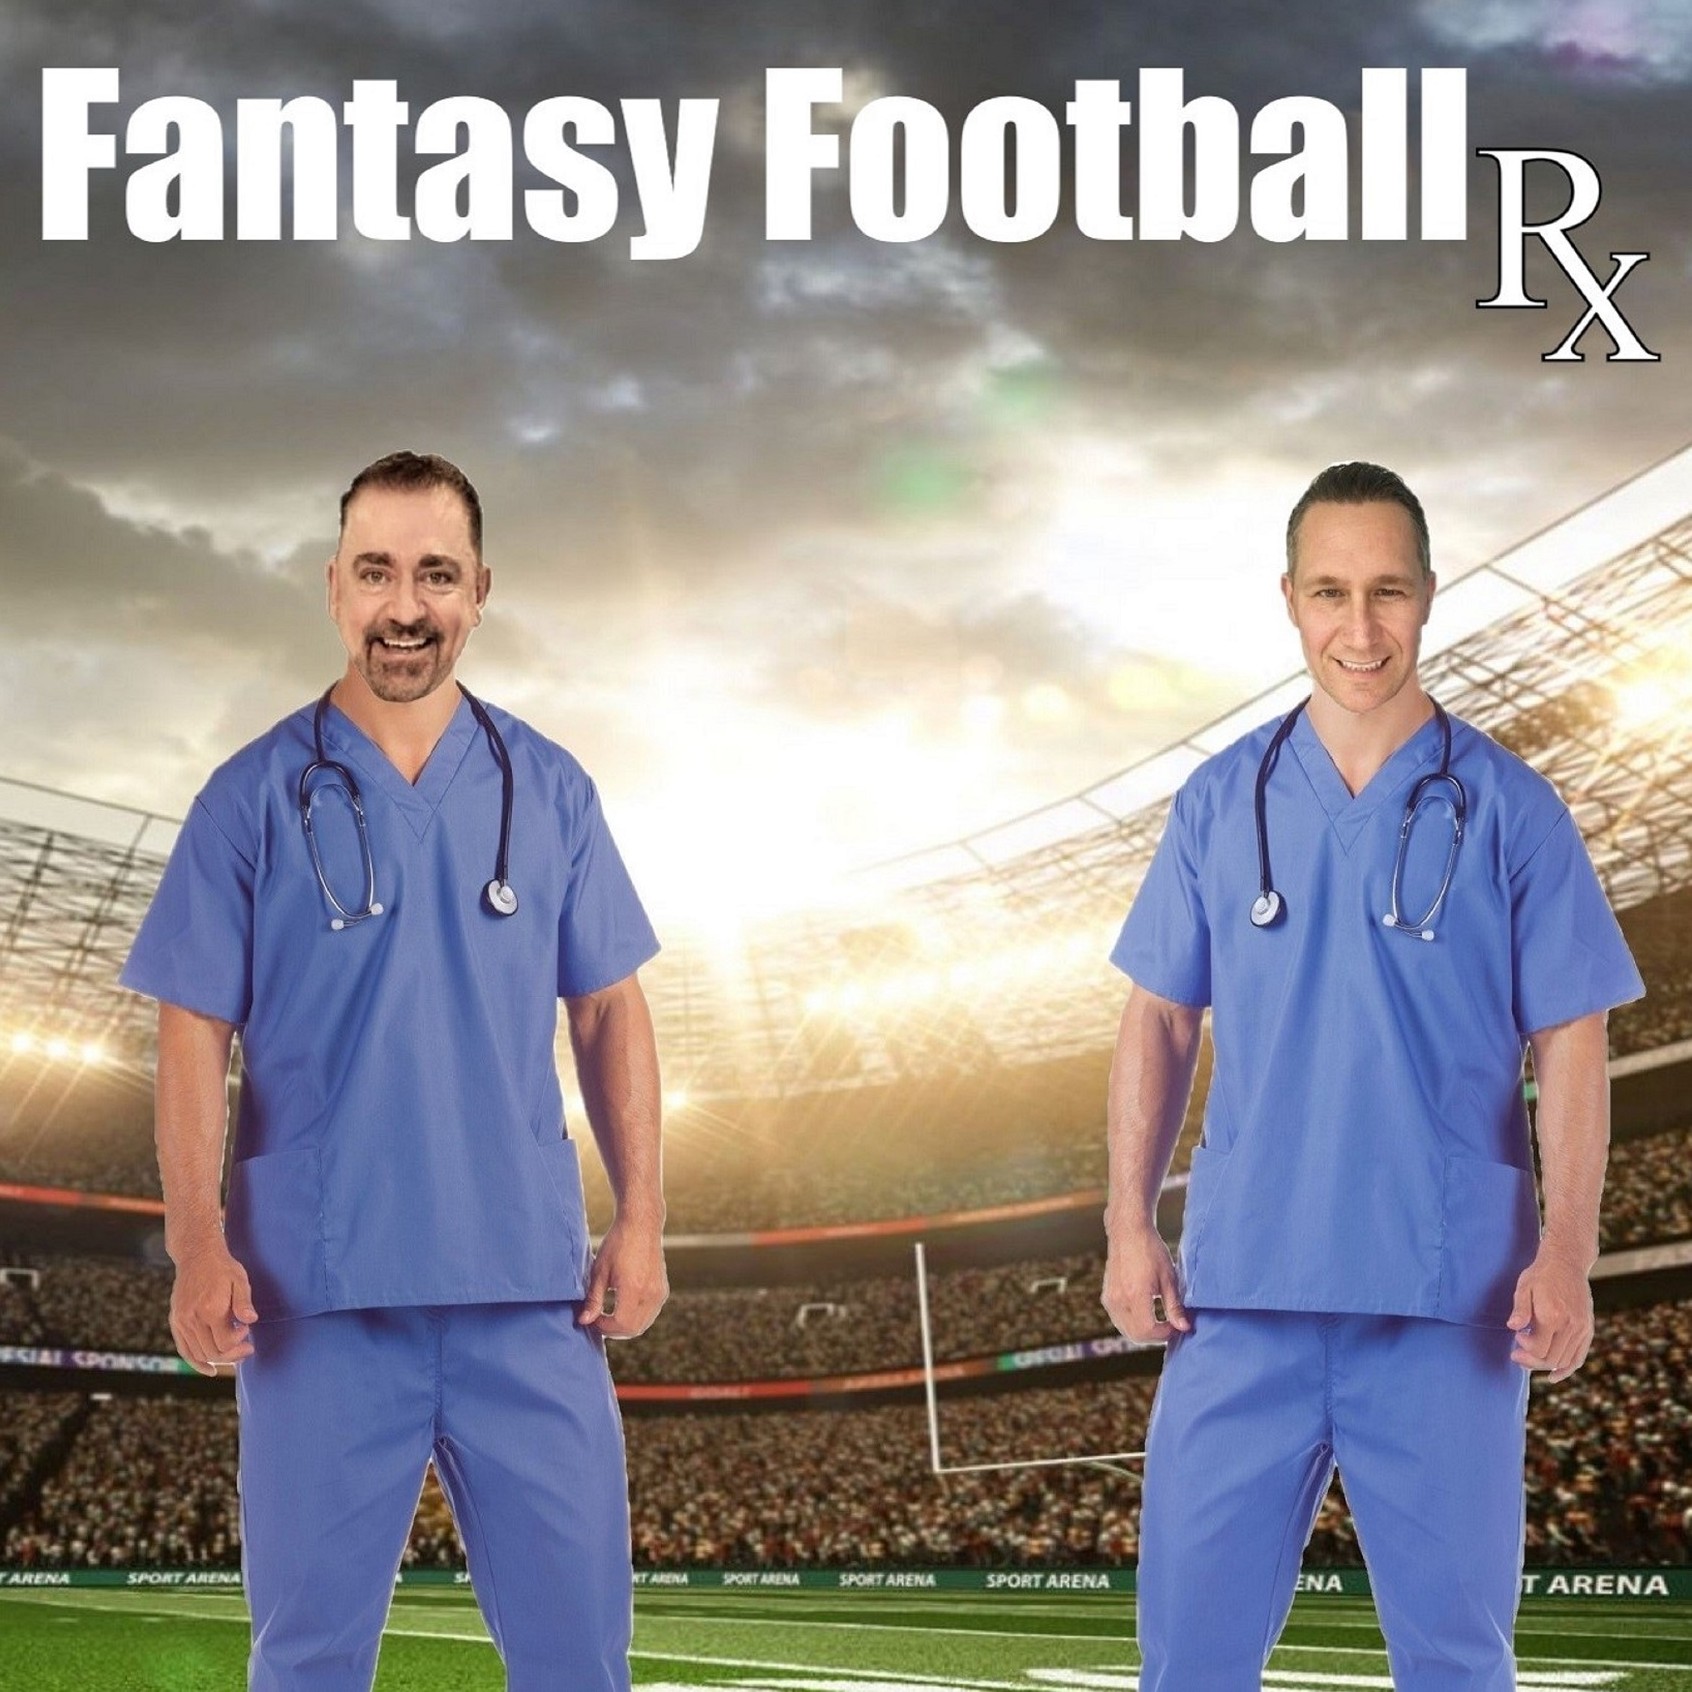 Fantasy Football Rx